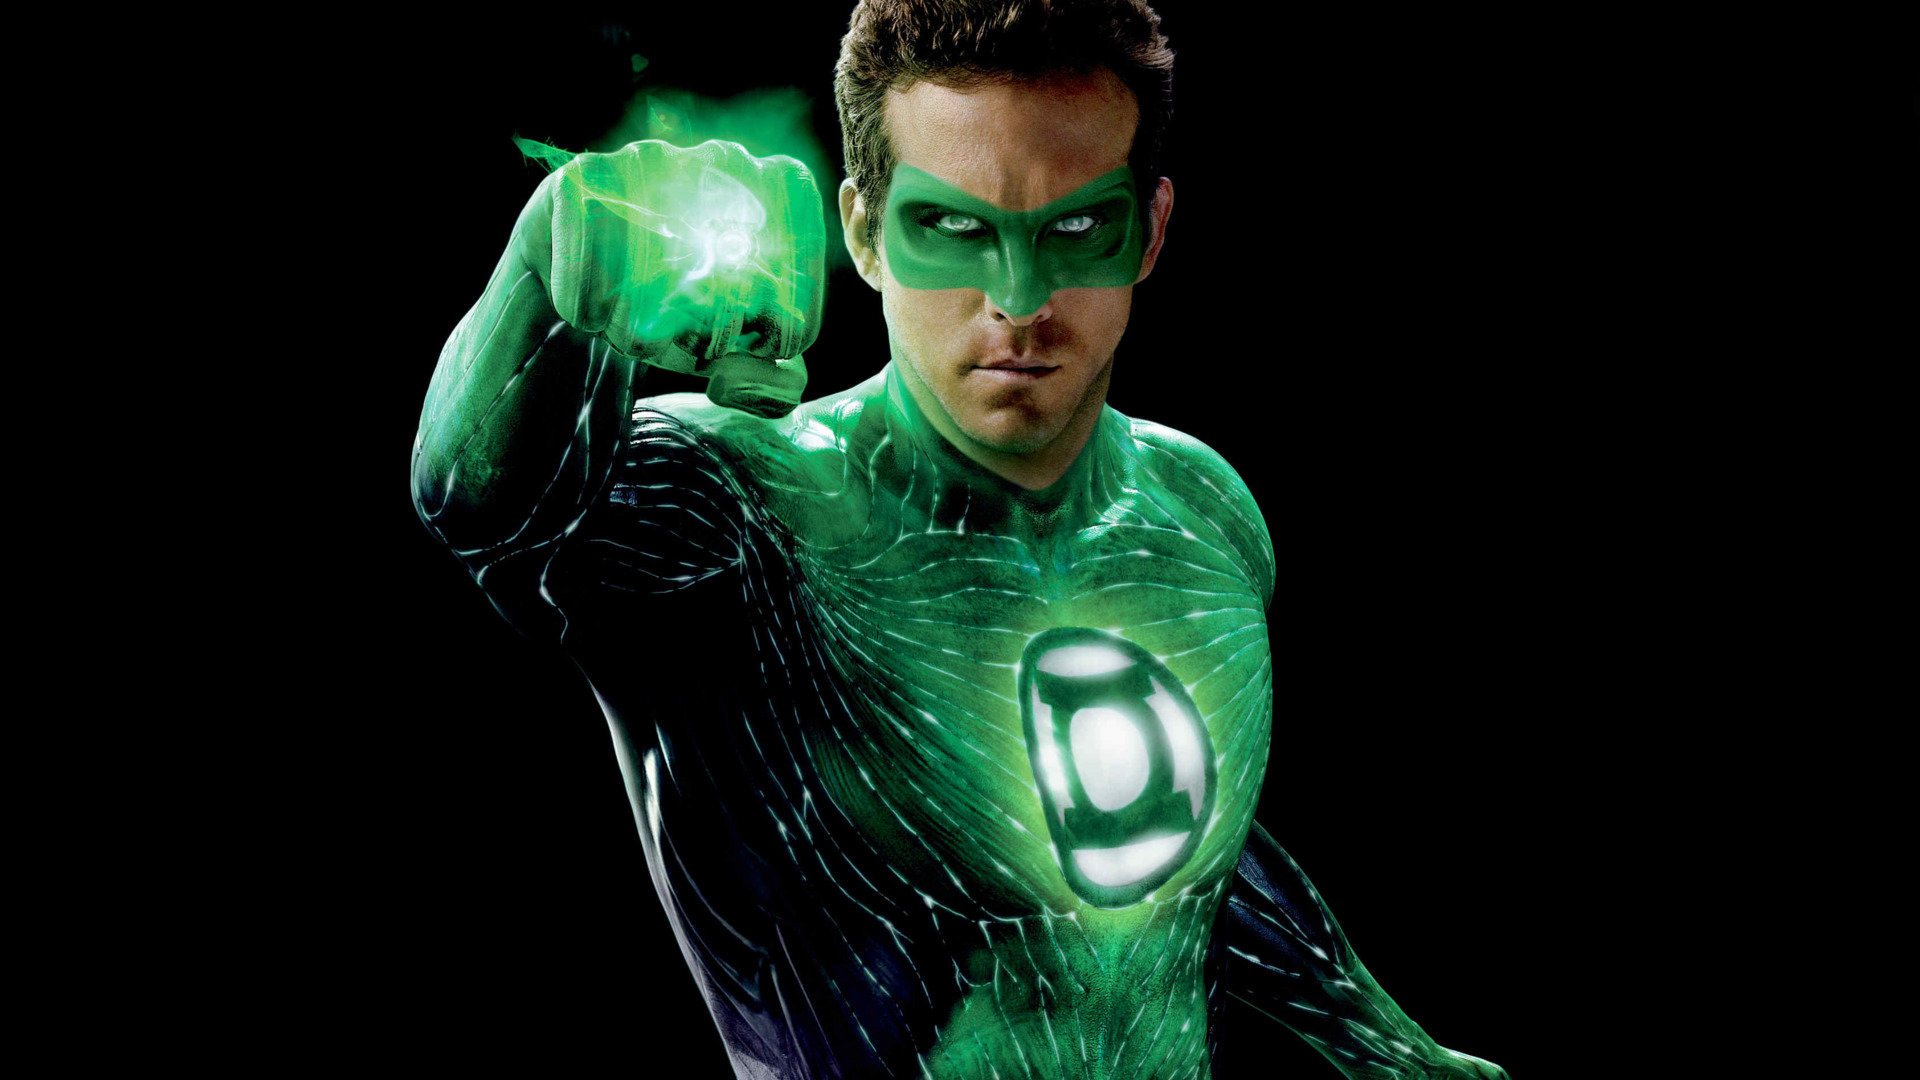 Best Green Lantern Movie wallpaper ID:50660 for High Resolution full hd computer